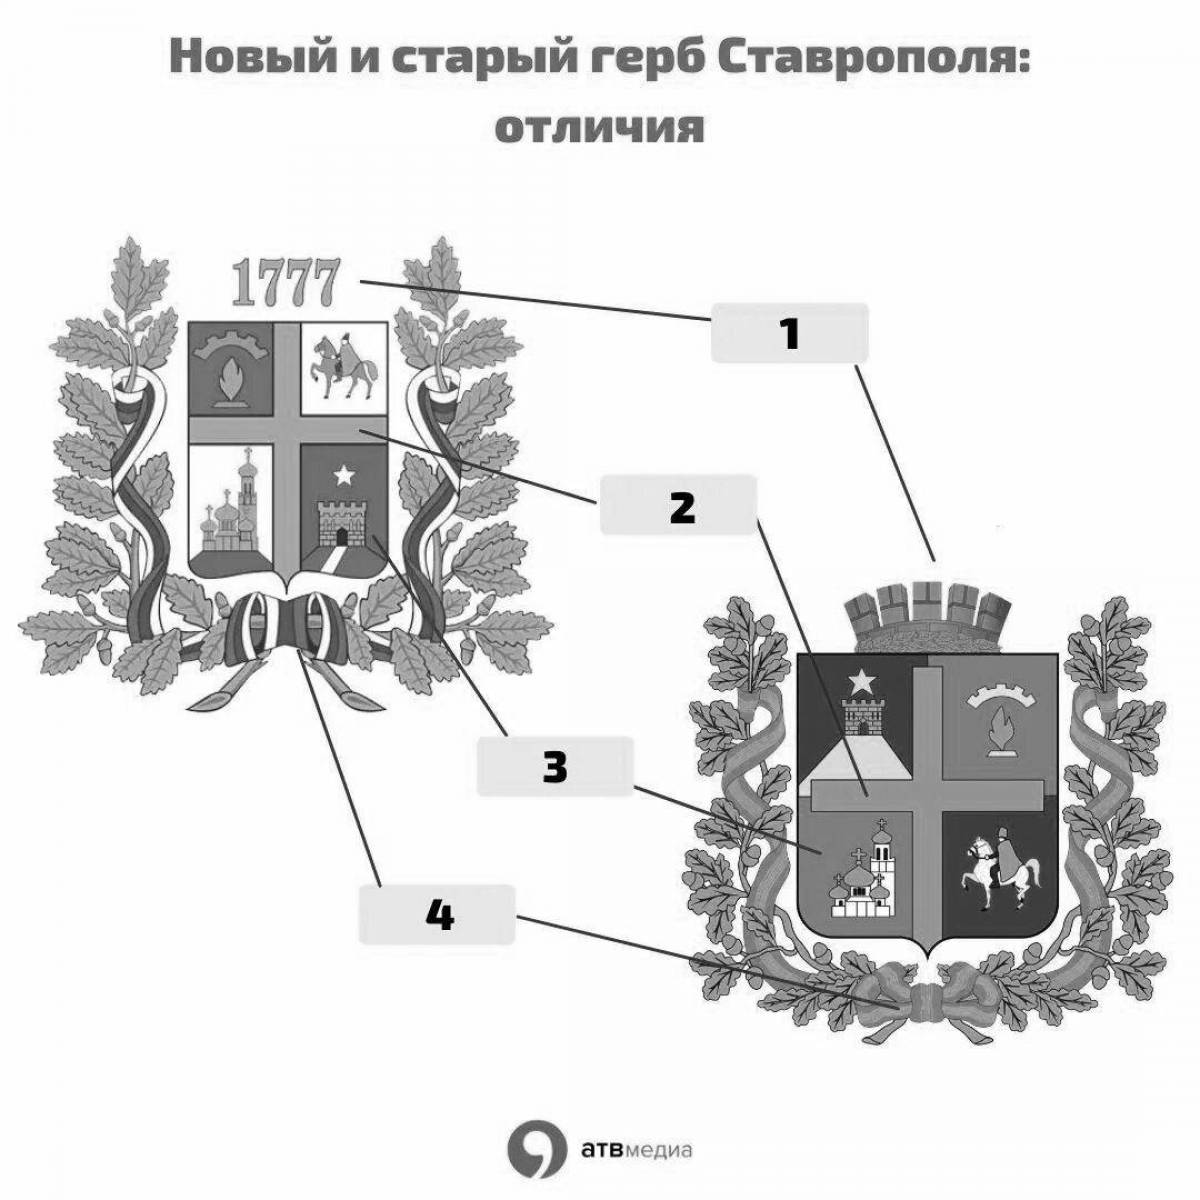 Elegant coloring coat of arms of stavropol